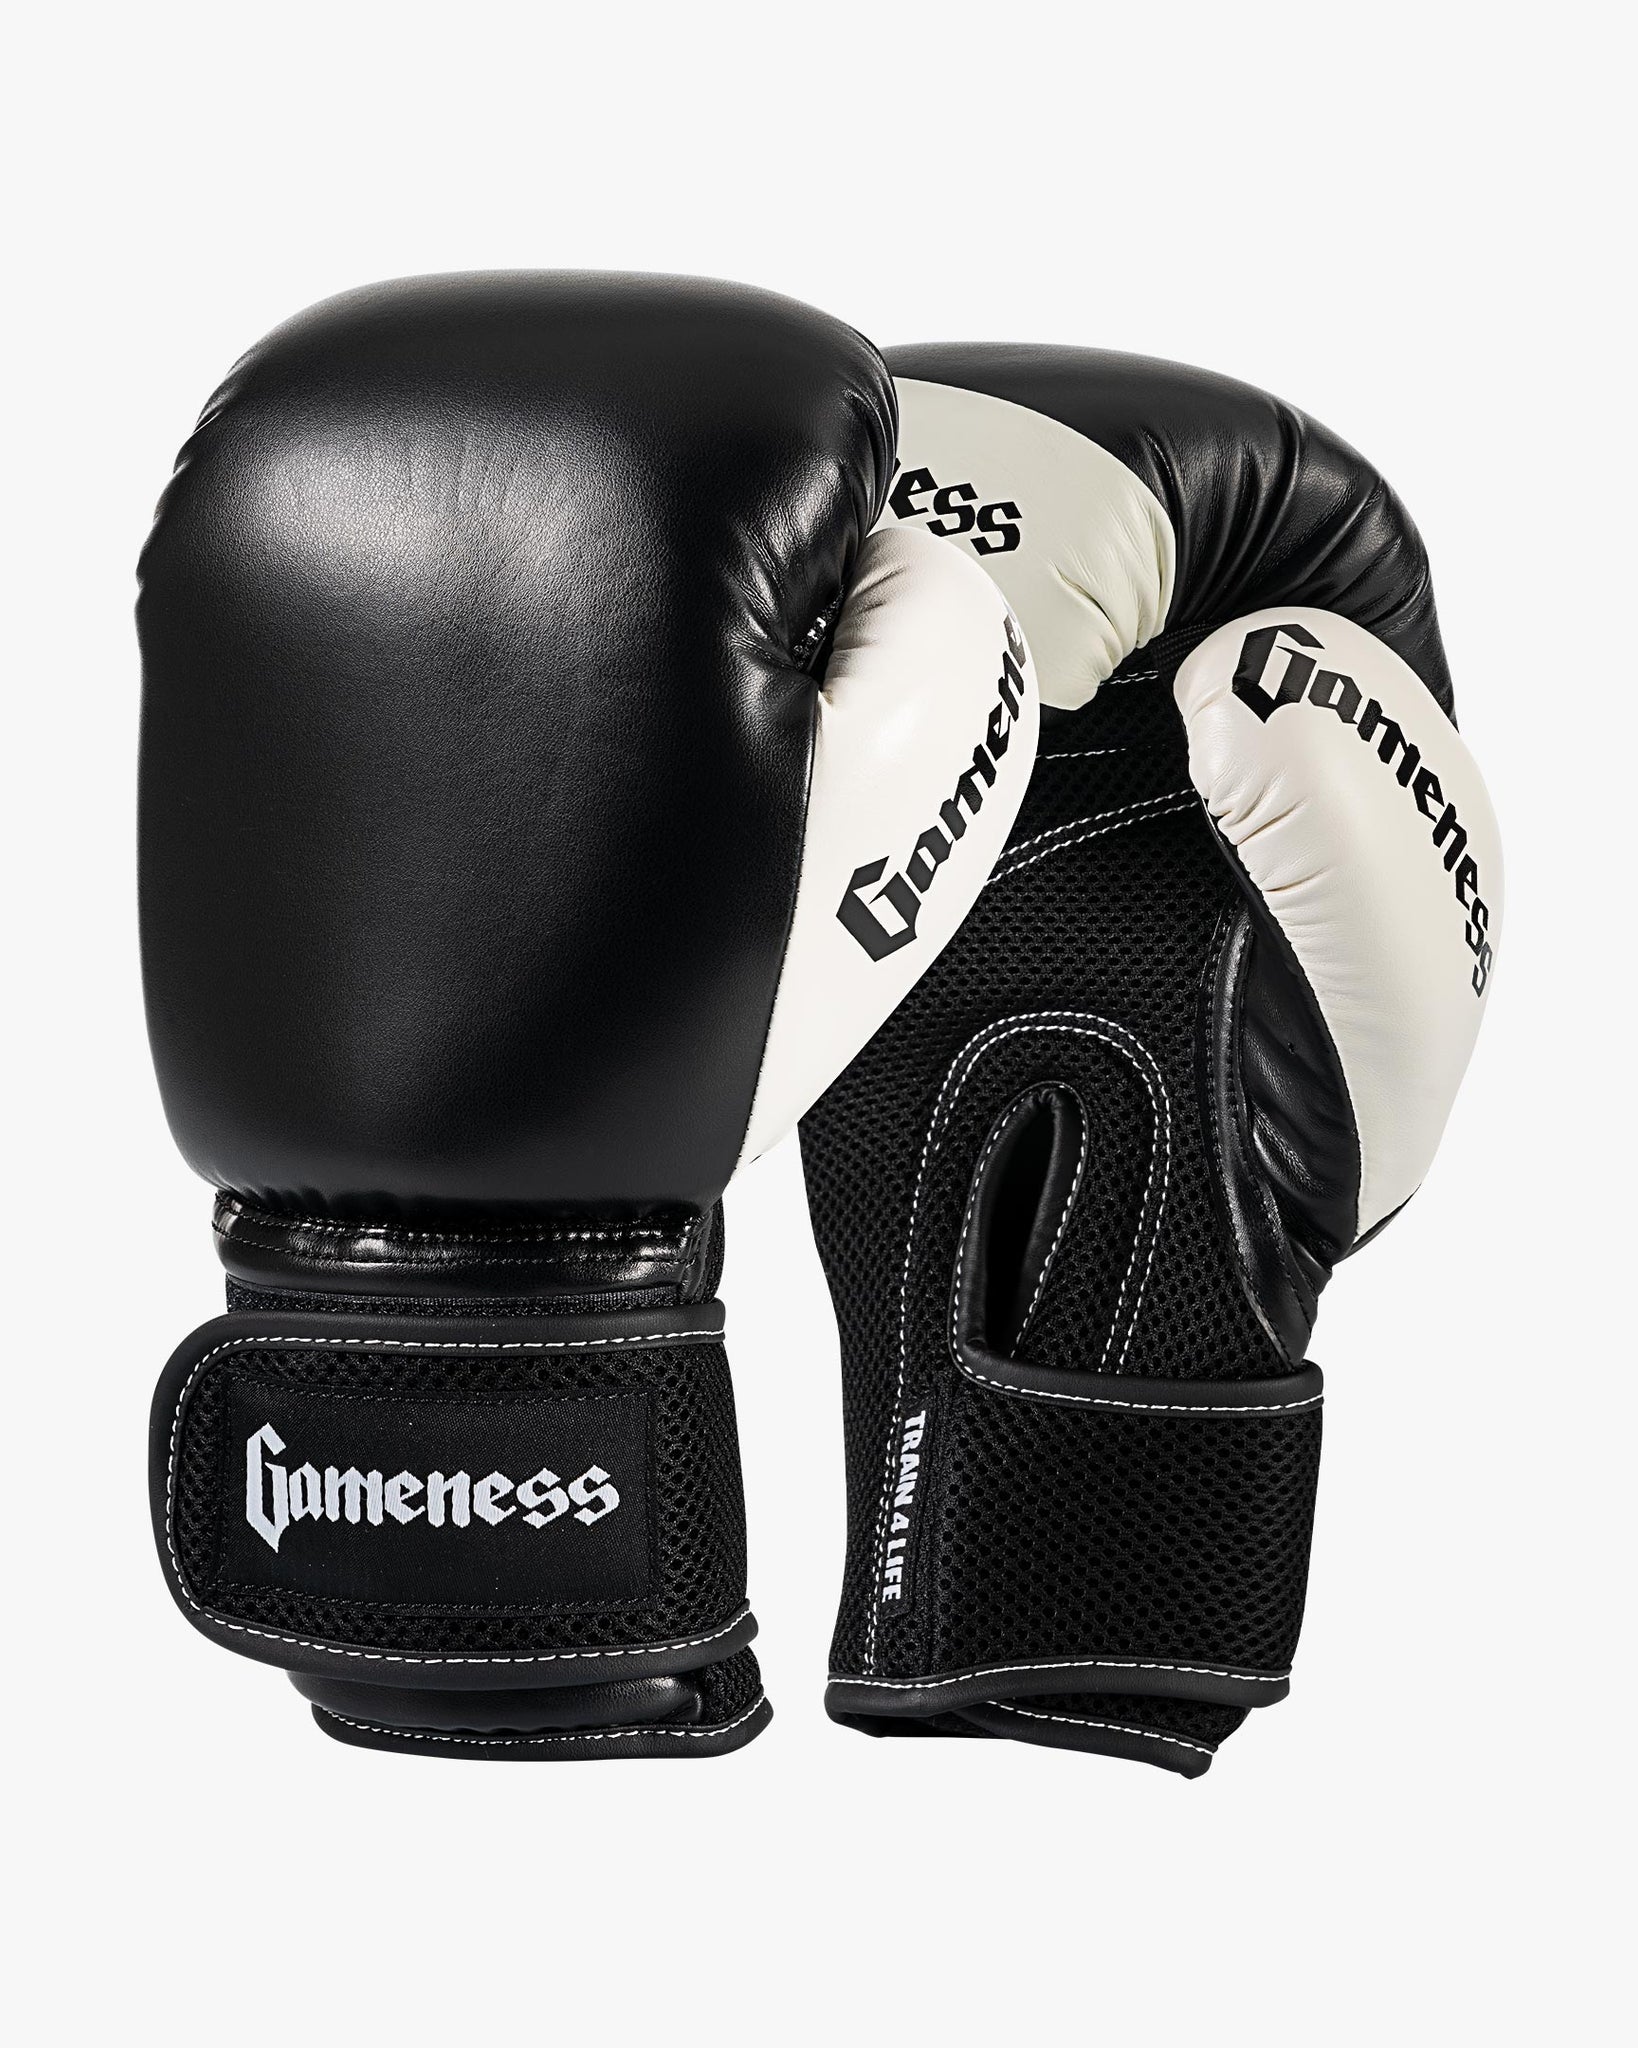 Gameness Boxing Glove Black